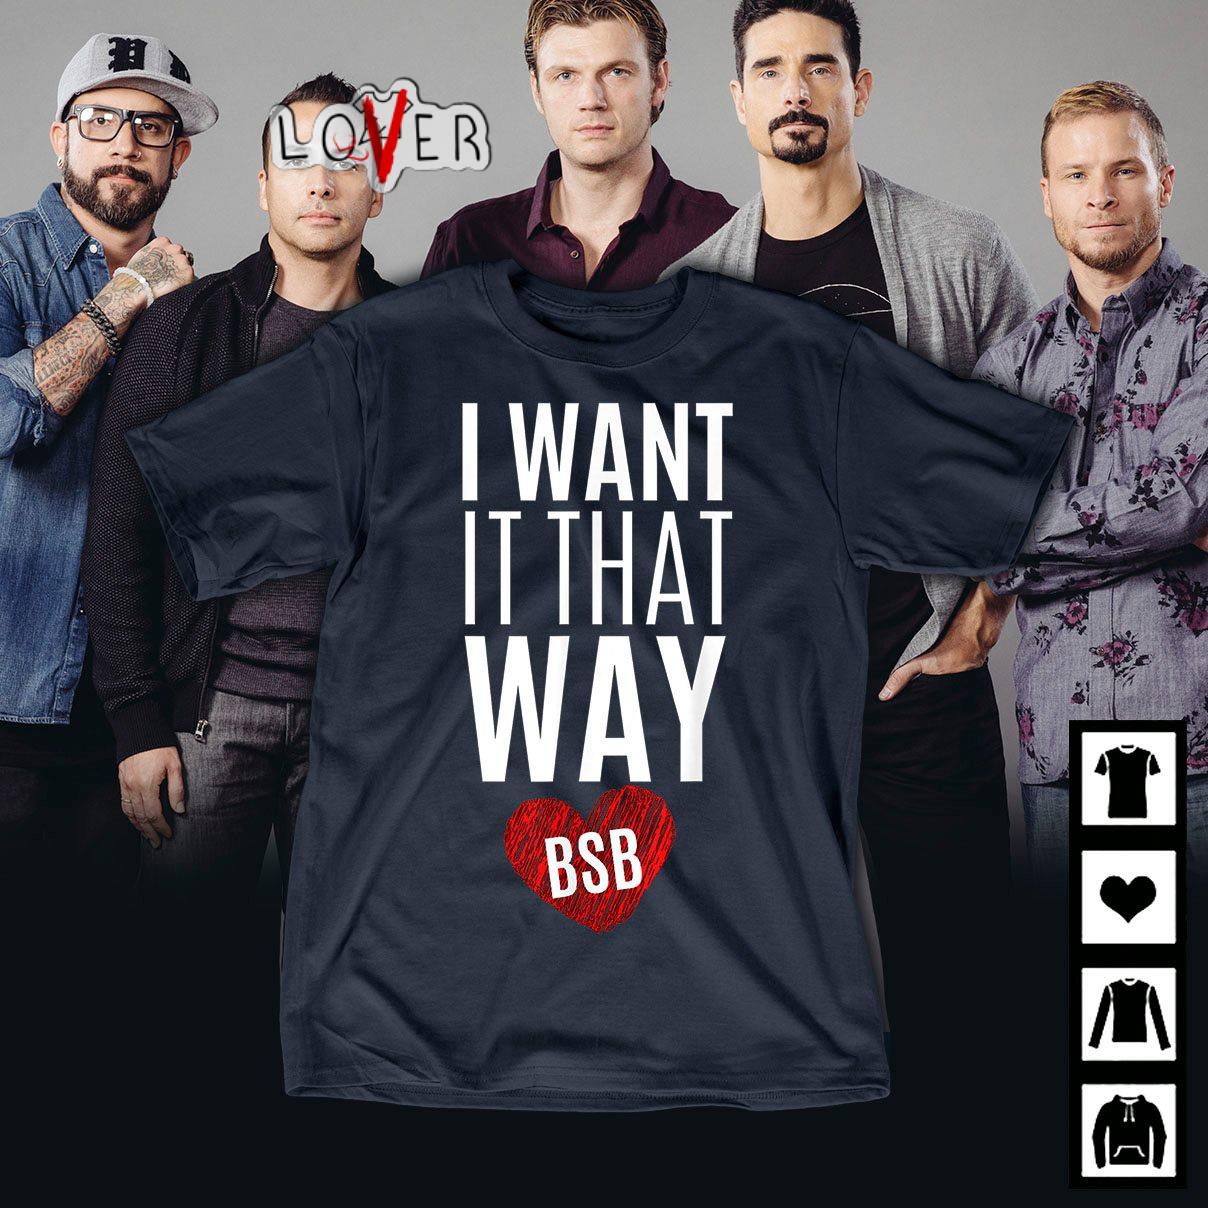 I Want It That Way - Backstreet Boys 